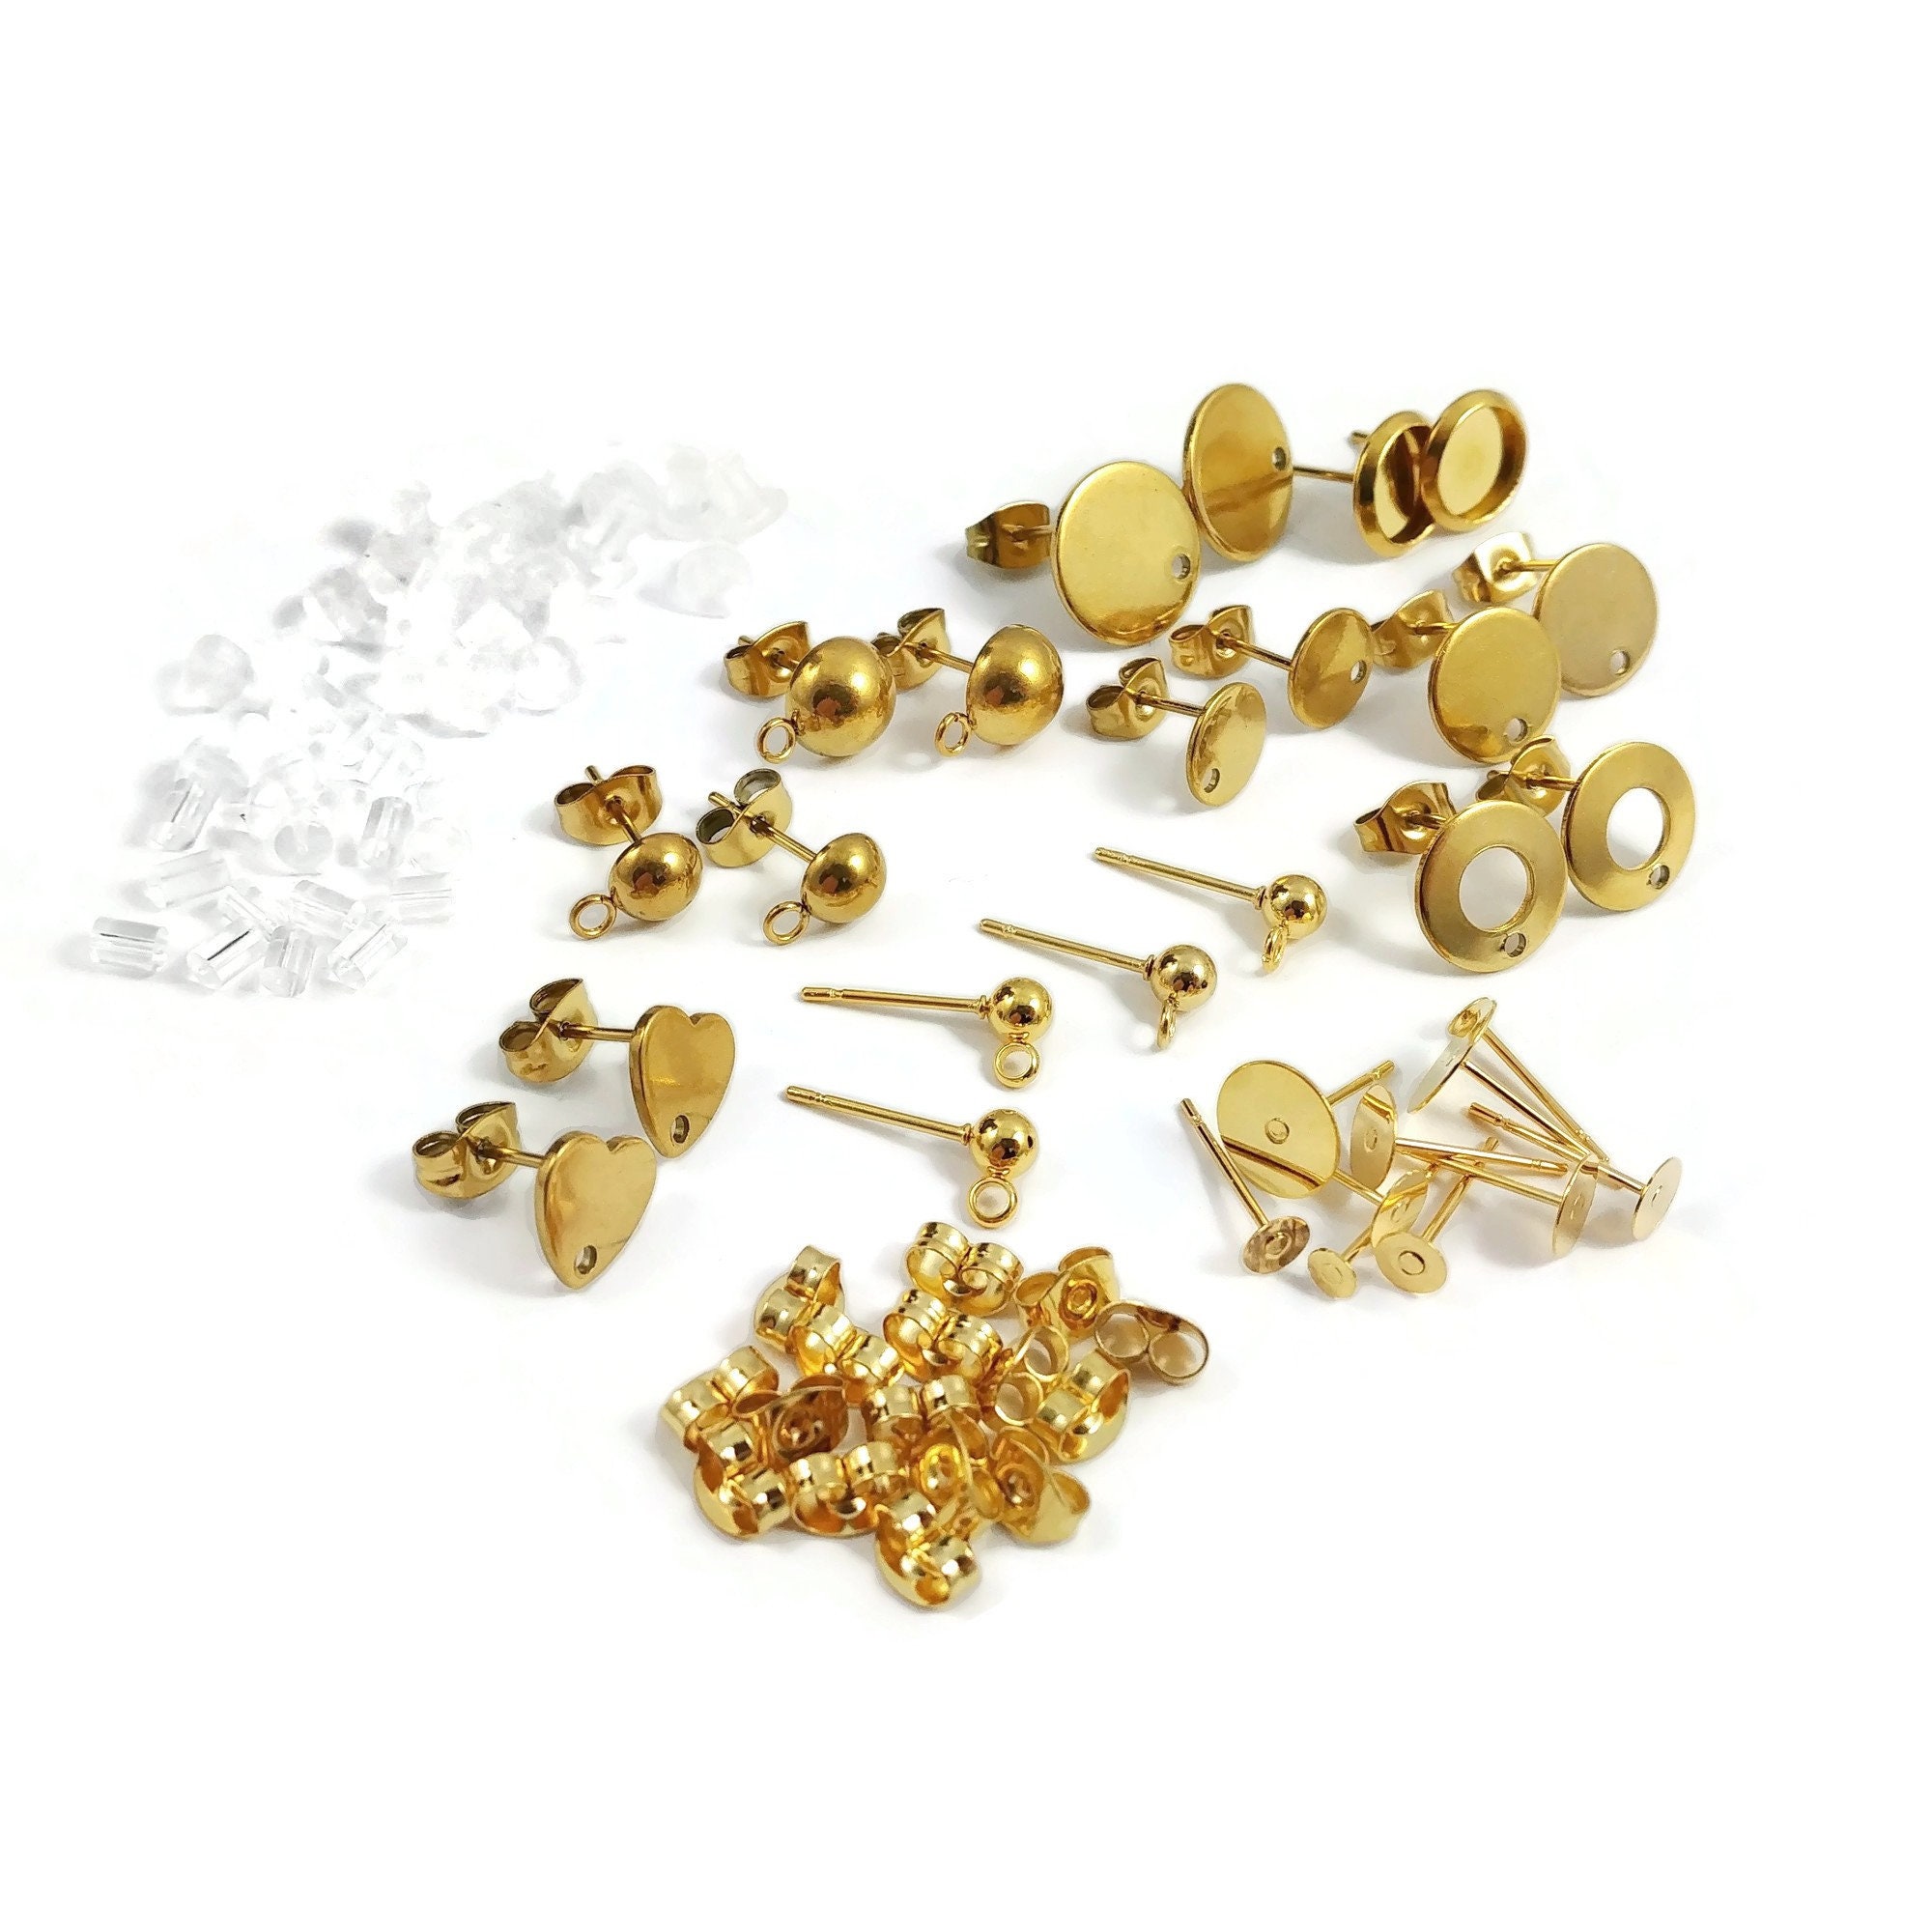 50pcs/set Stainless Steel Earrings Posts & Backs for DIY Stud Earrings  Jewelry Making Findings